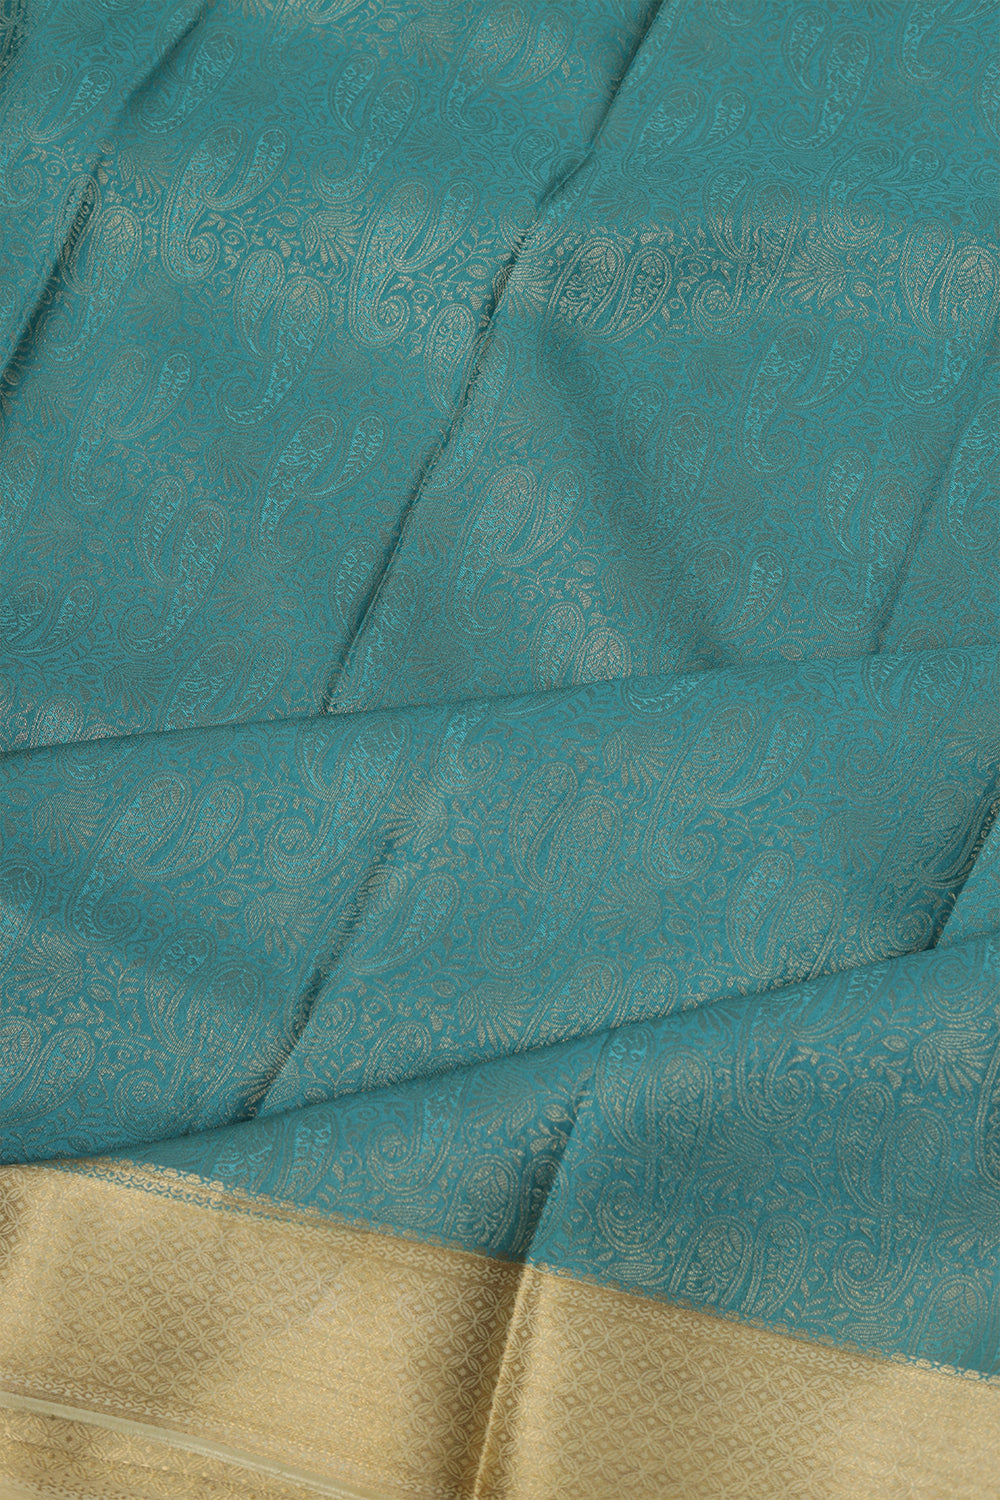 Ramar blue Mysore silk saree